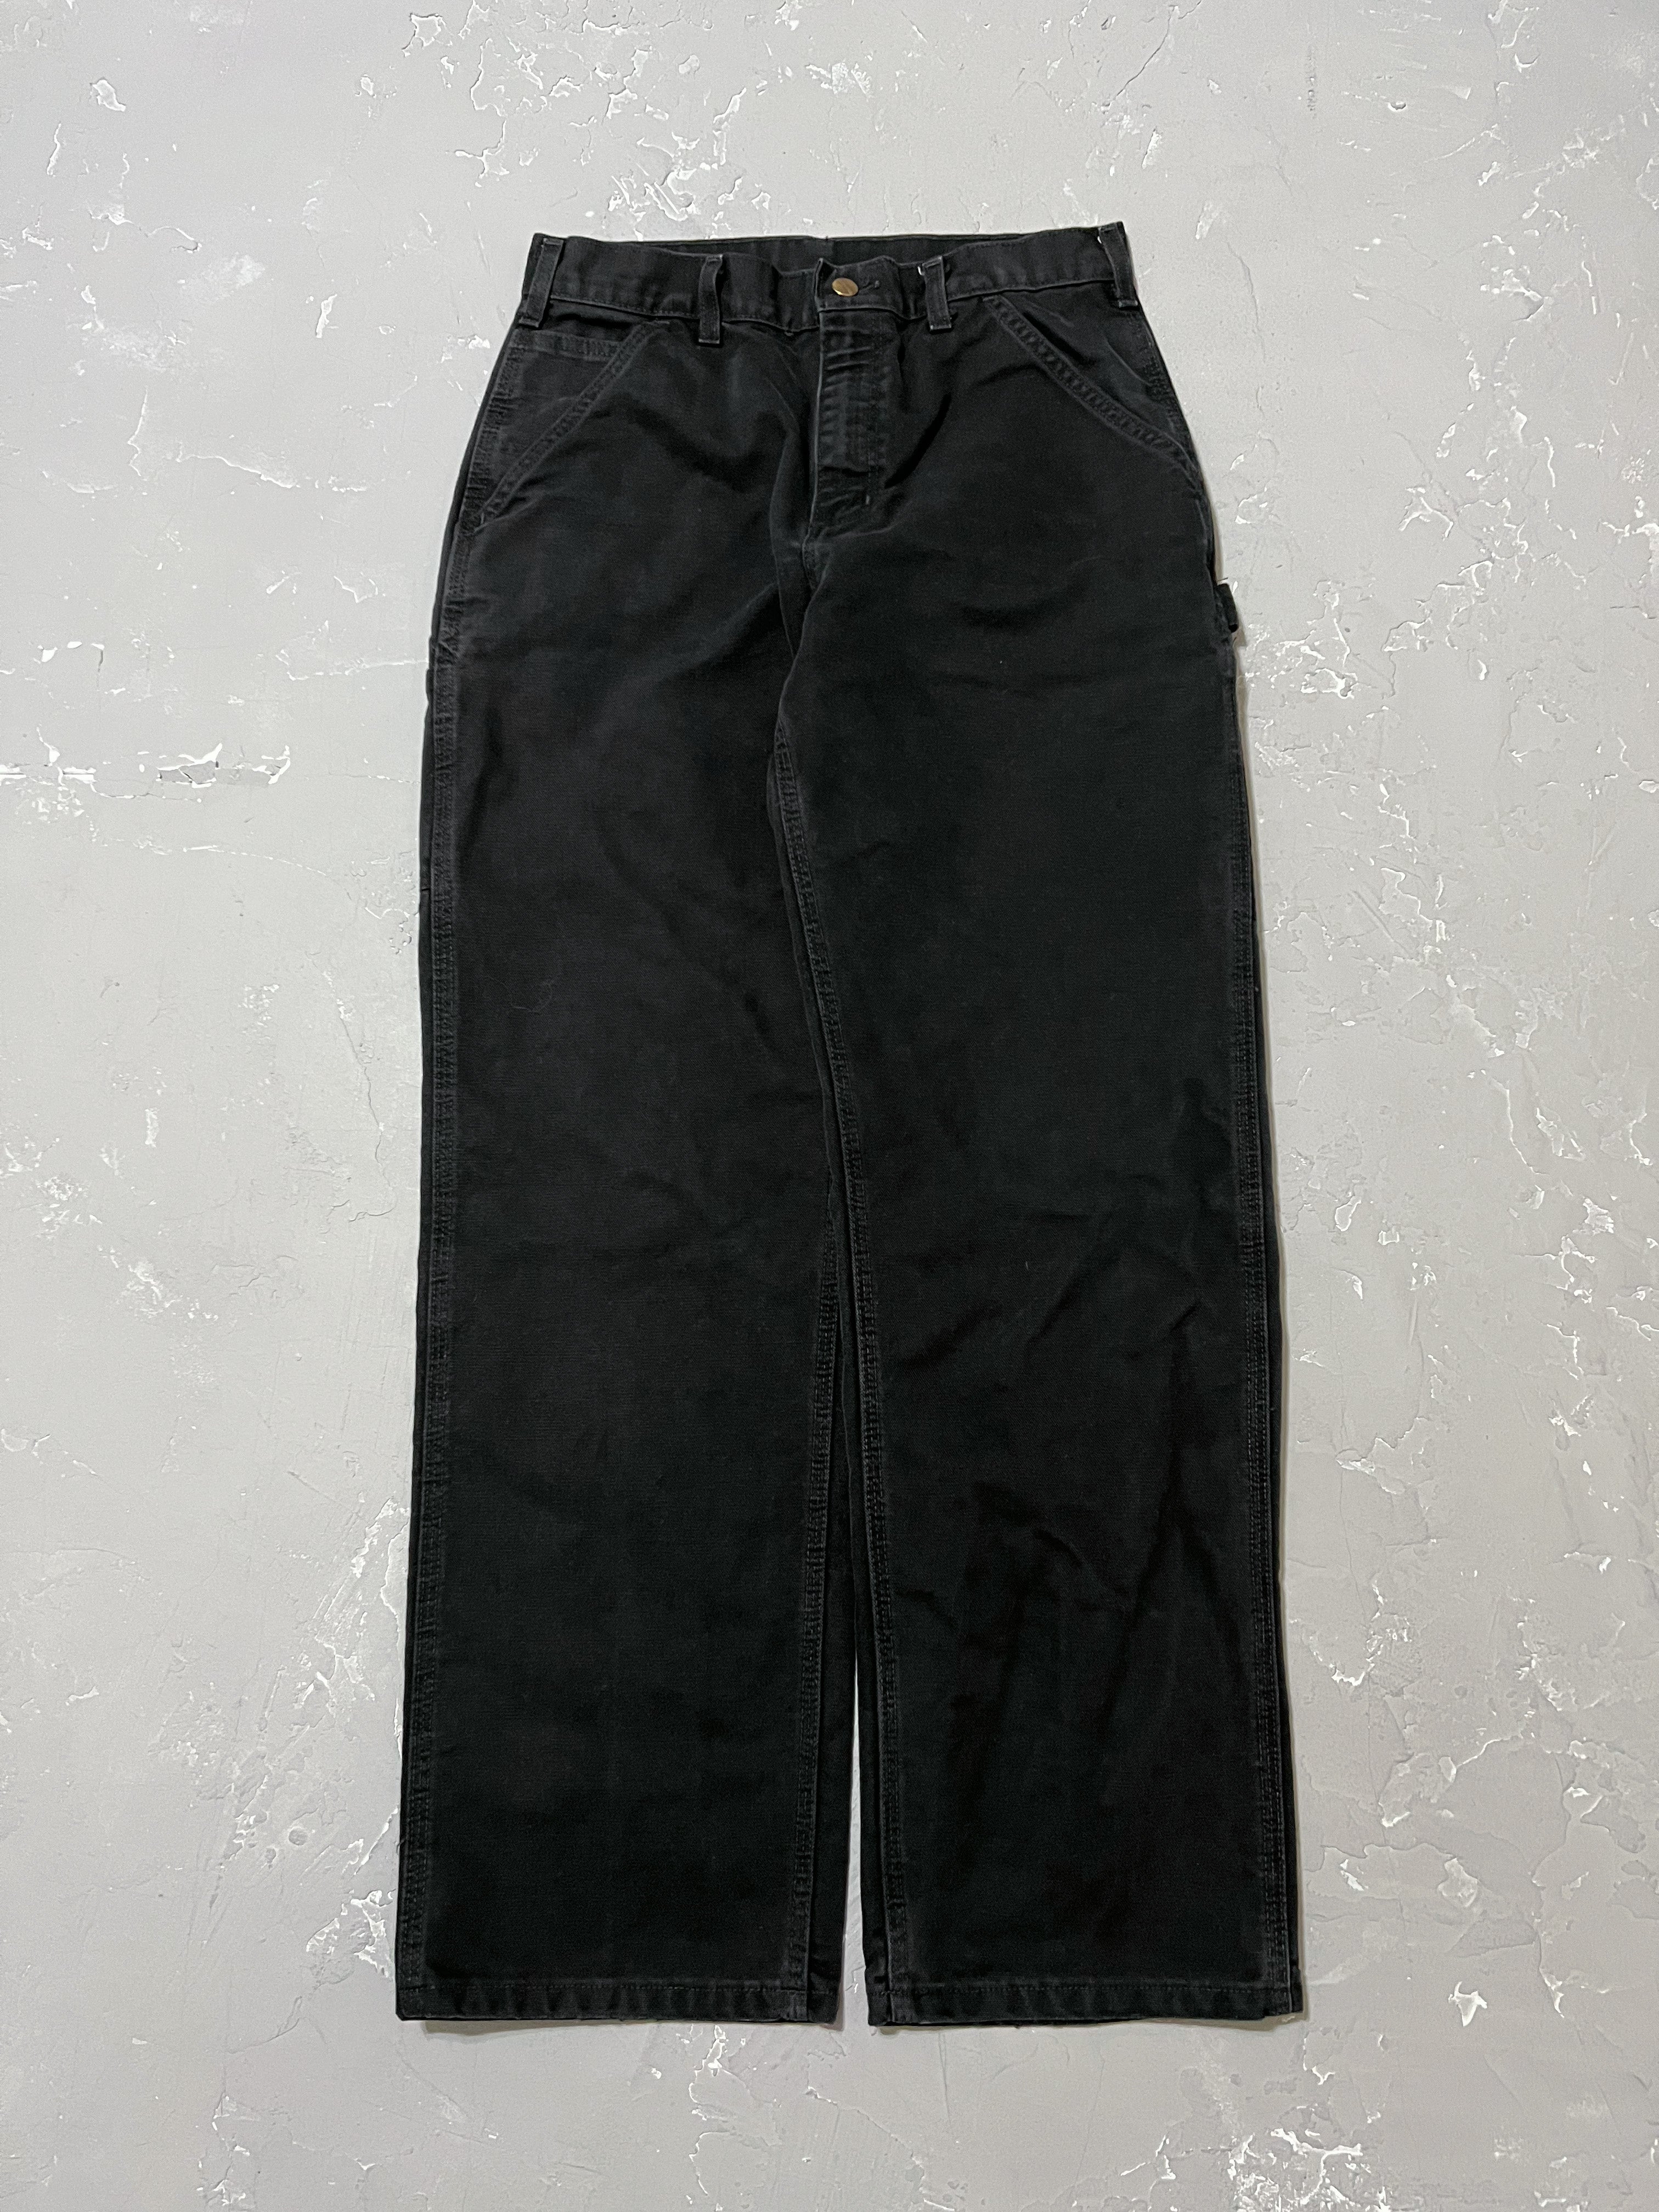 Carhartt Black Carpenter Pants [31 x 32]